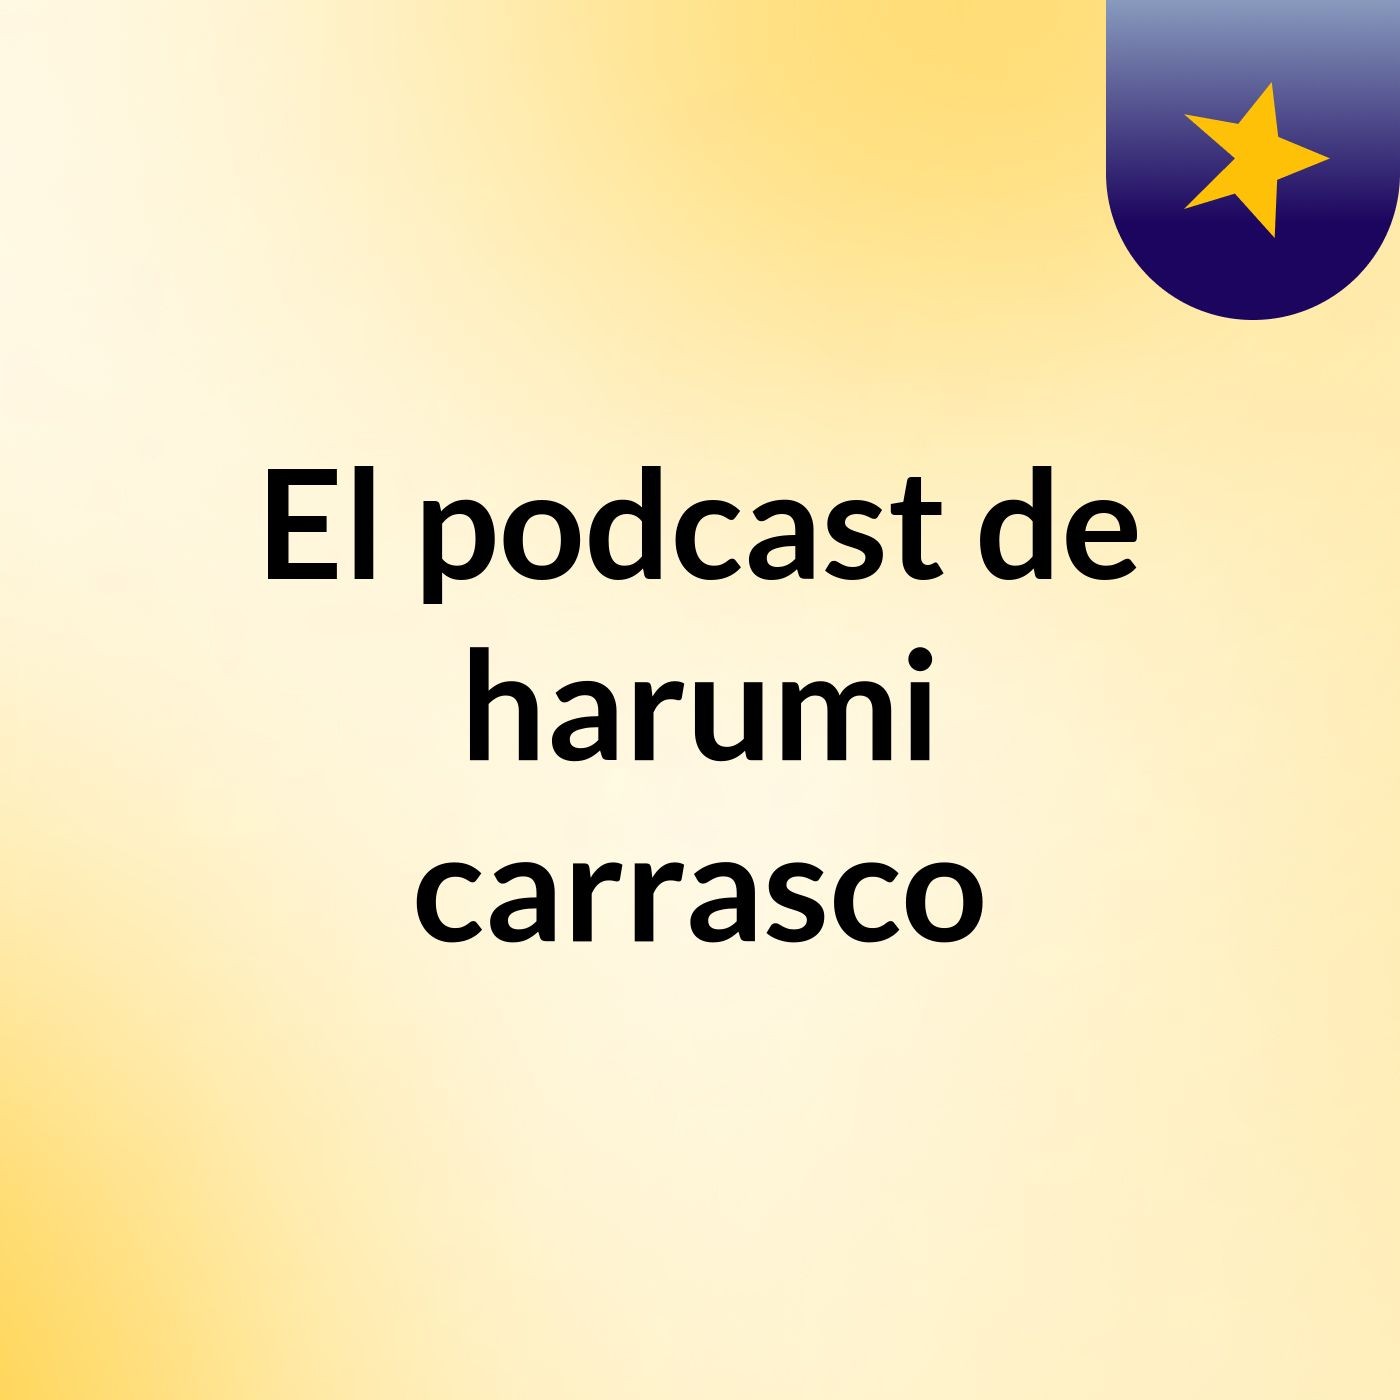 El podcast de harumi carrasco